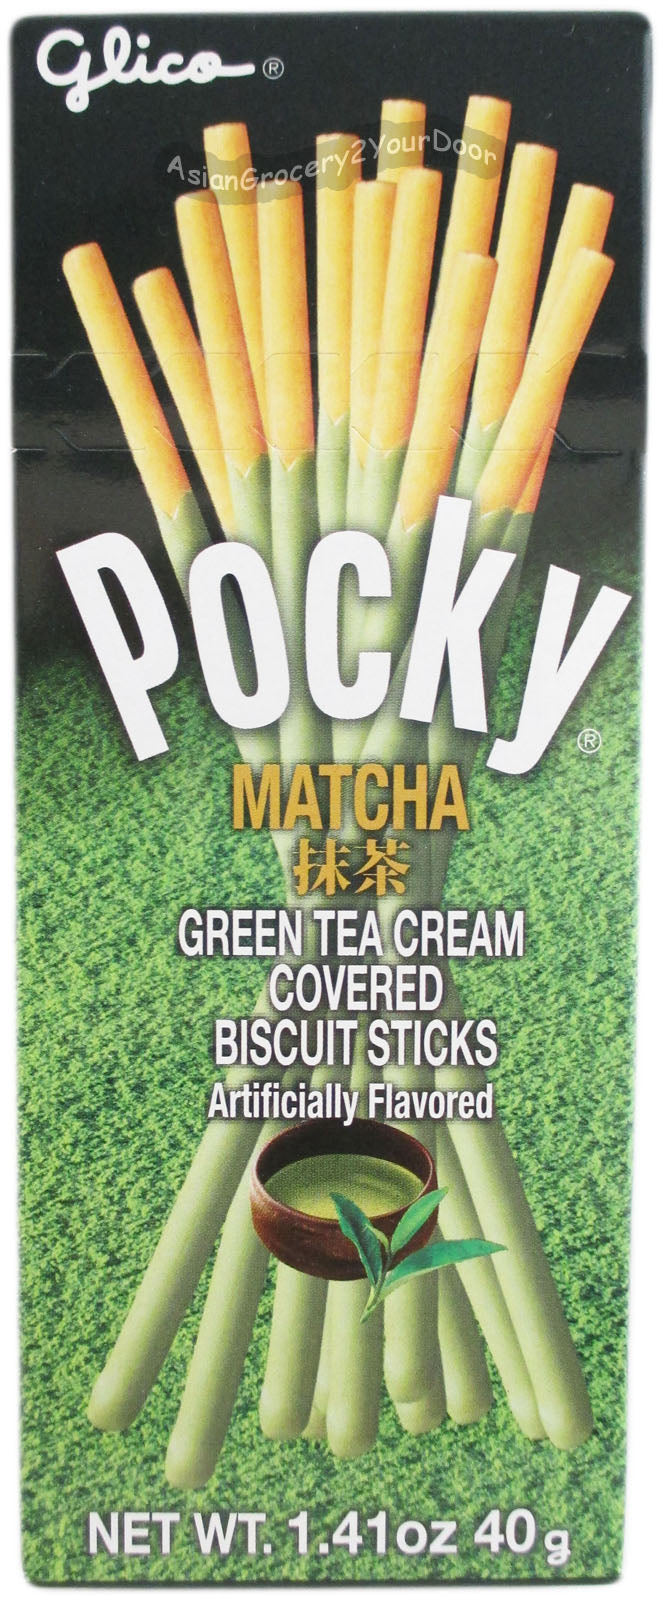 Pocky Matcha - Green Tea Cookie Stick - 1.41 oz / 40 g - Asiangrocery2yourdoor